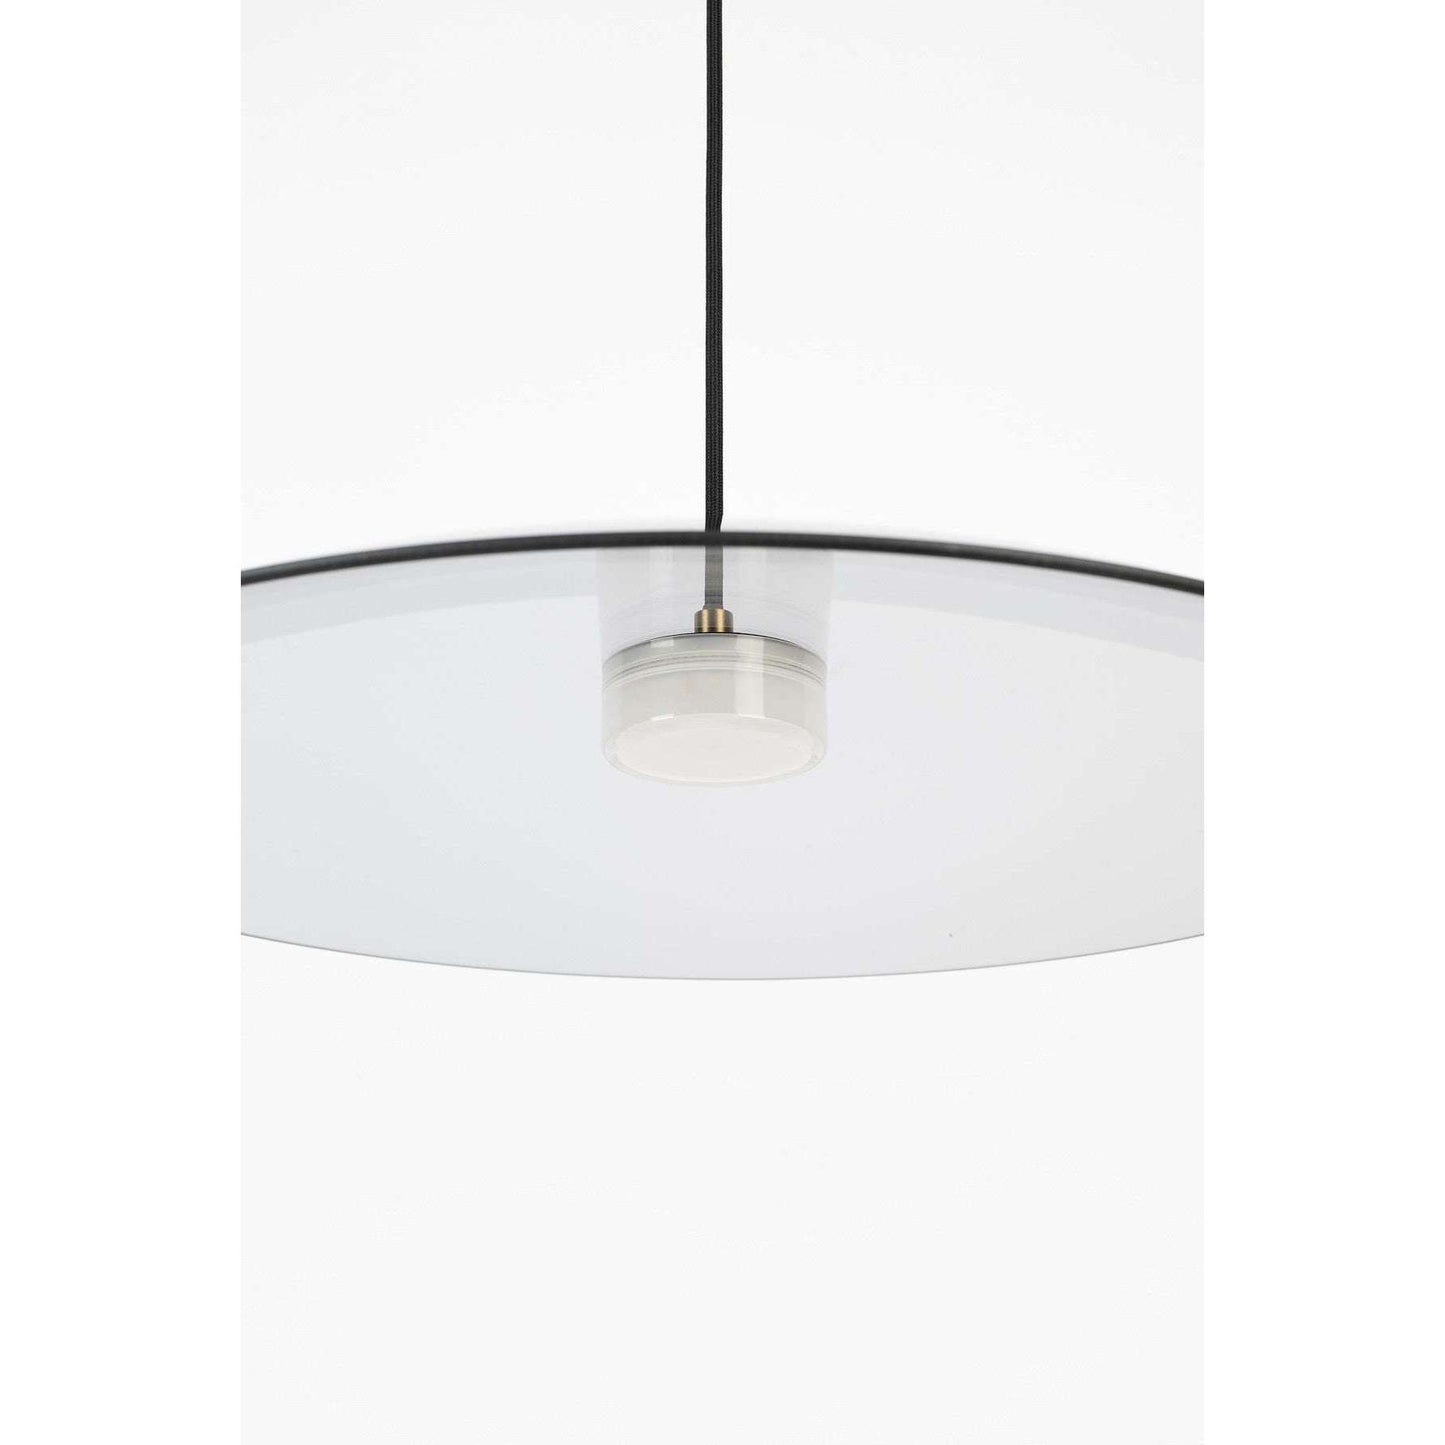 Zuiver hanglamp float  Ø50 x 165 cm